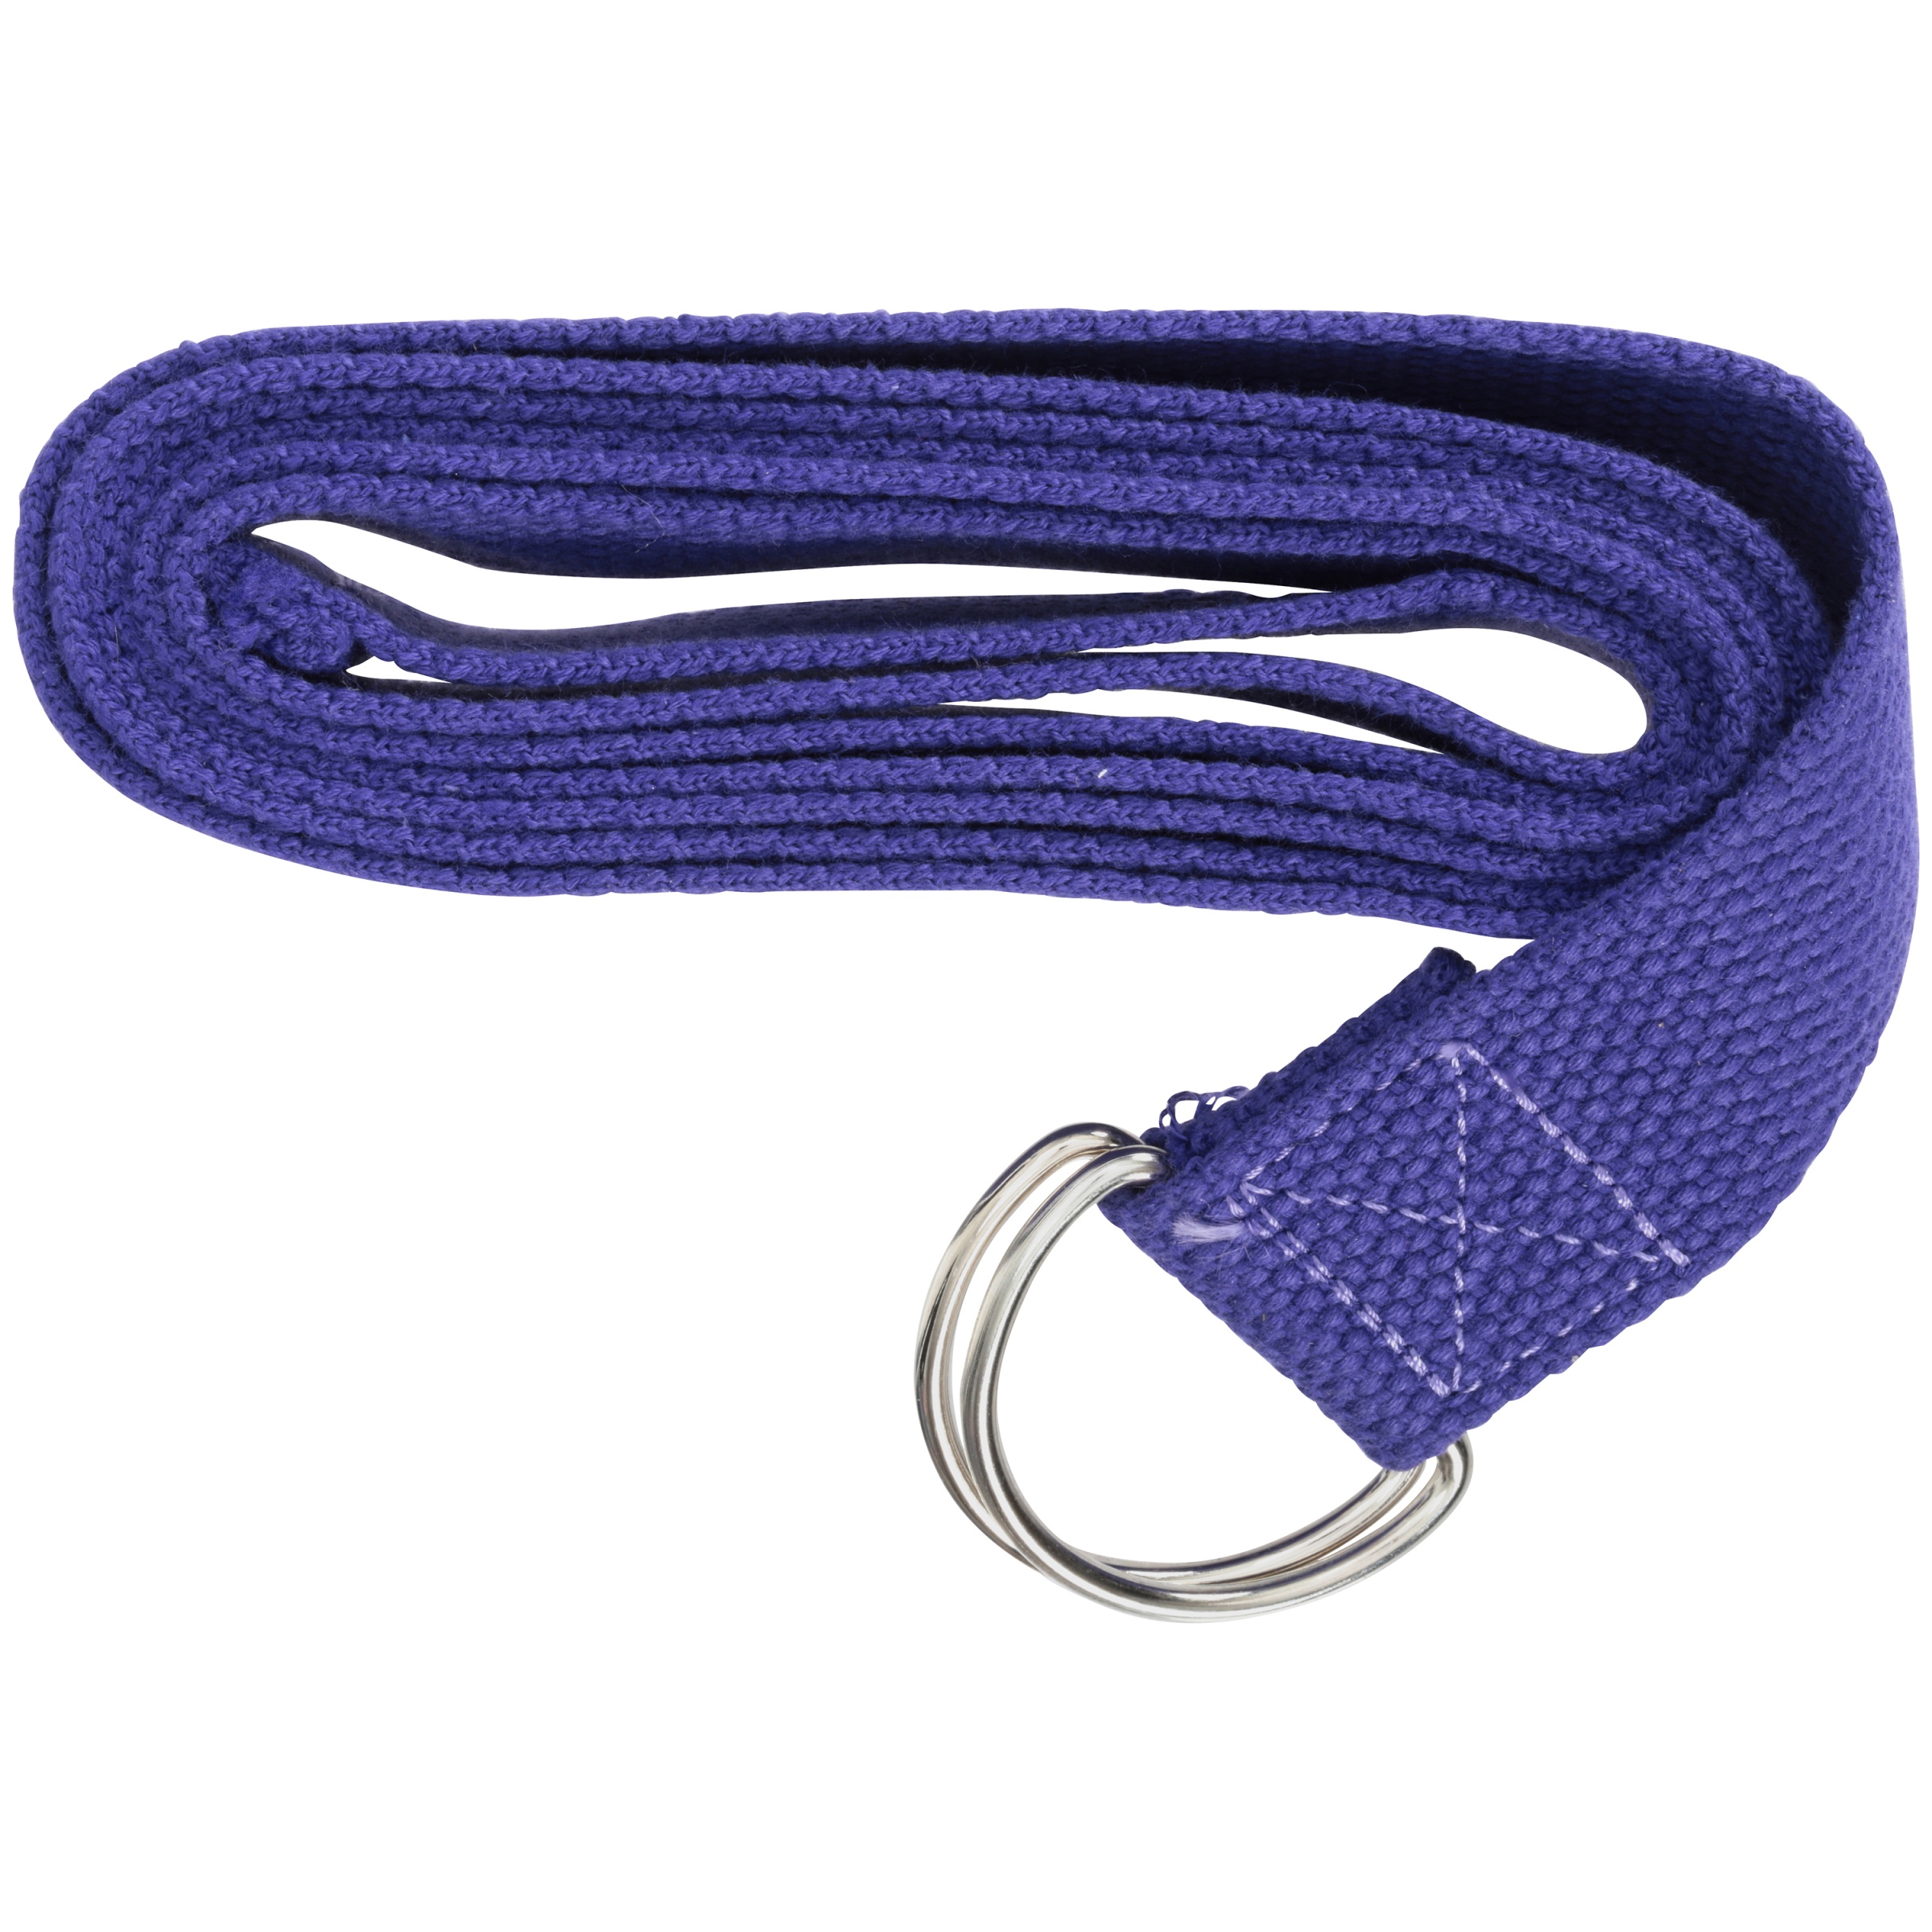 Gaiam Yoga Strap, 6 Ft, Purple - image 2 of 5